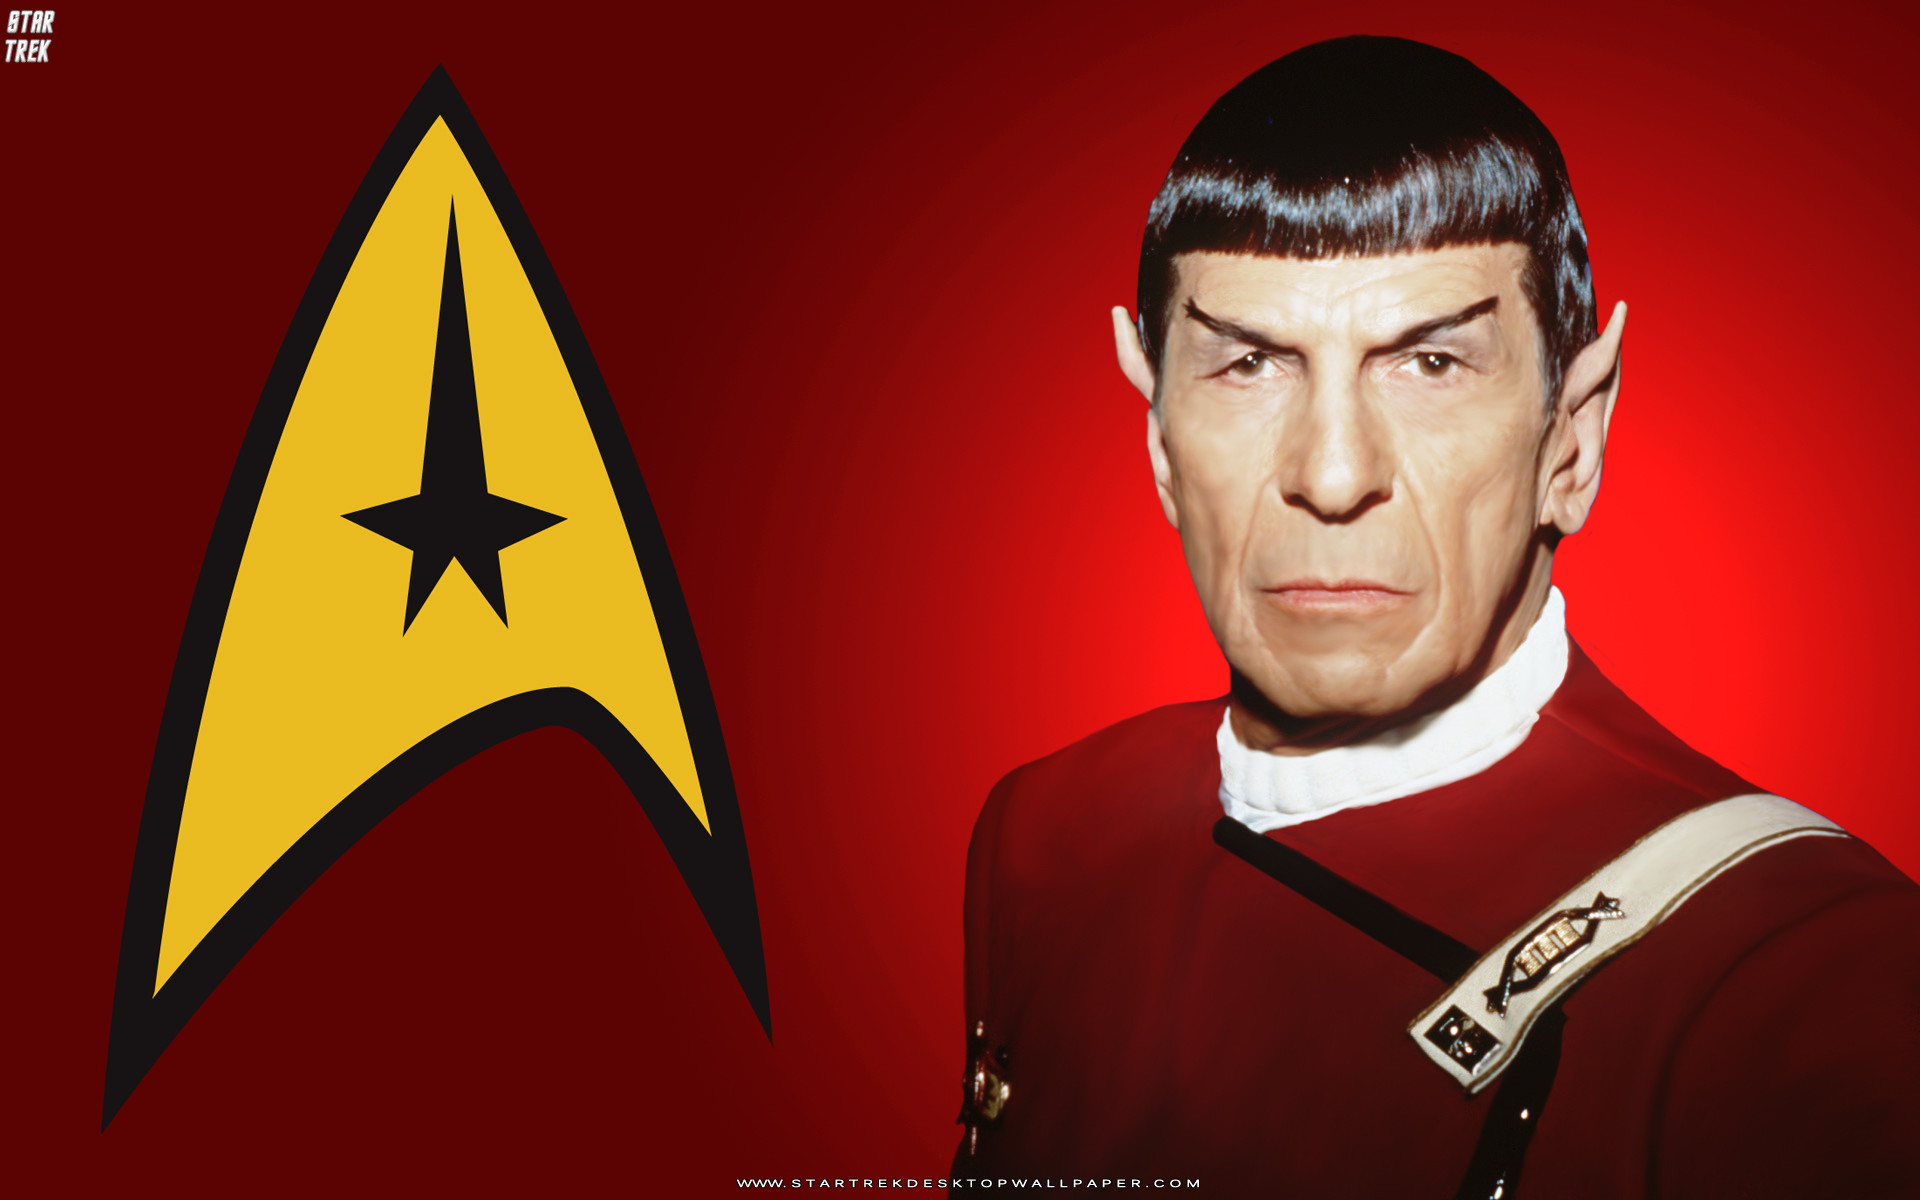 1920x1200 Star Trek Mister Spock. Free Star Trek computer desktop wallpaper, images,  pictures download